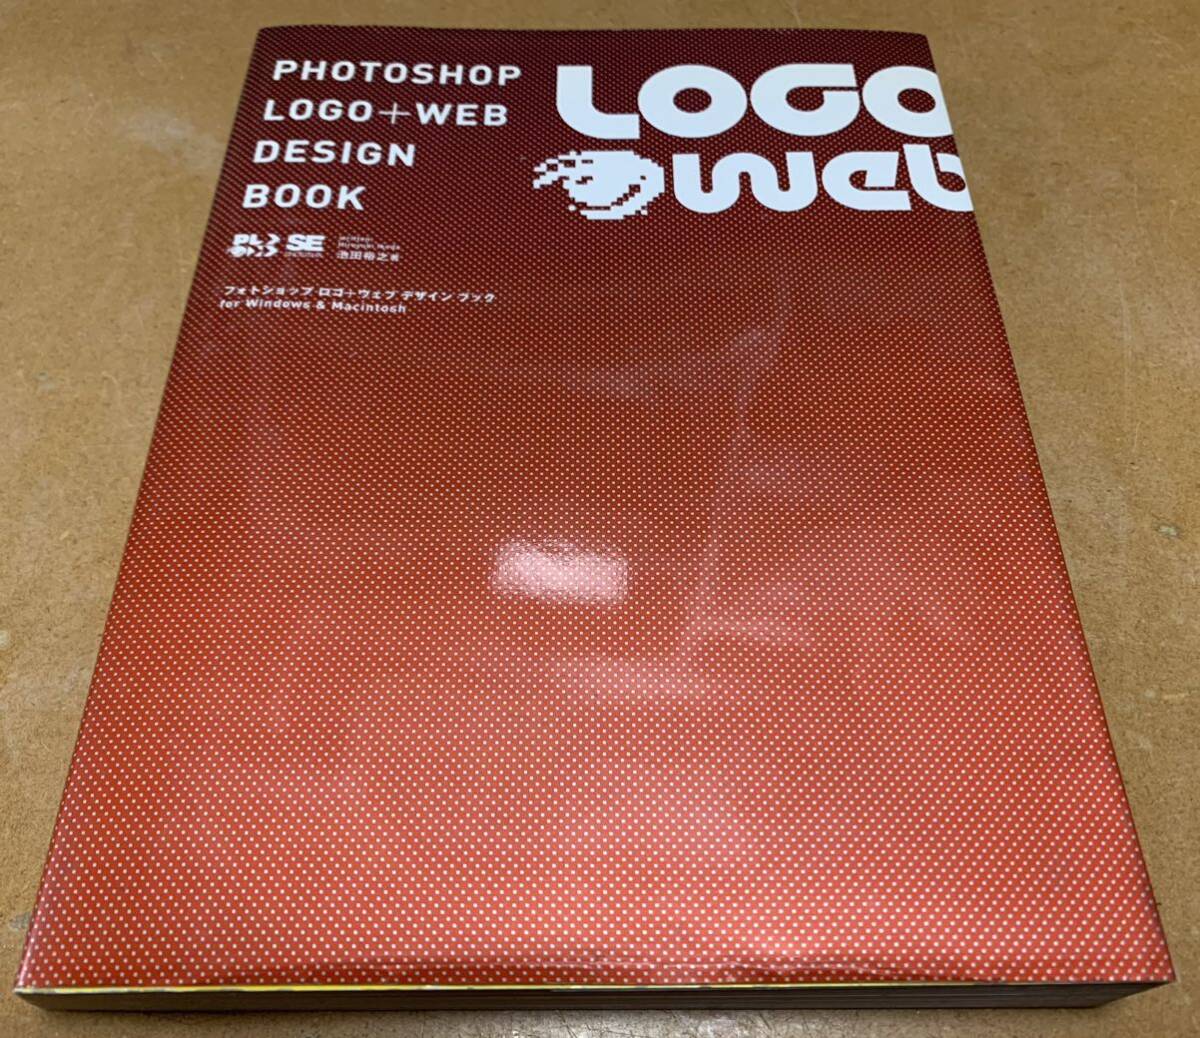 PHOTOSHOP LOGO+WEB DESIGN BOOKフォトショップ ロゴ＋ウェブ デザインブックfor Windows&Macintosh ボタンメニューマウスオーバーGIF作成